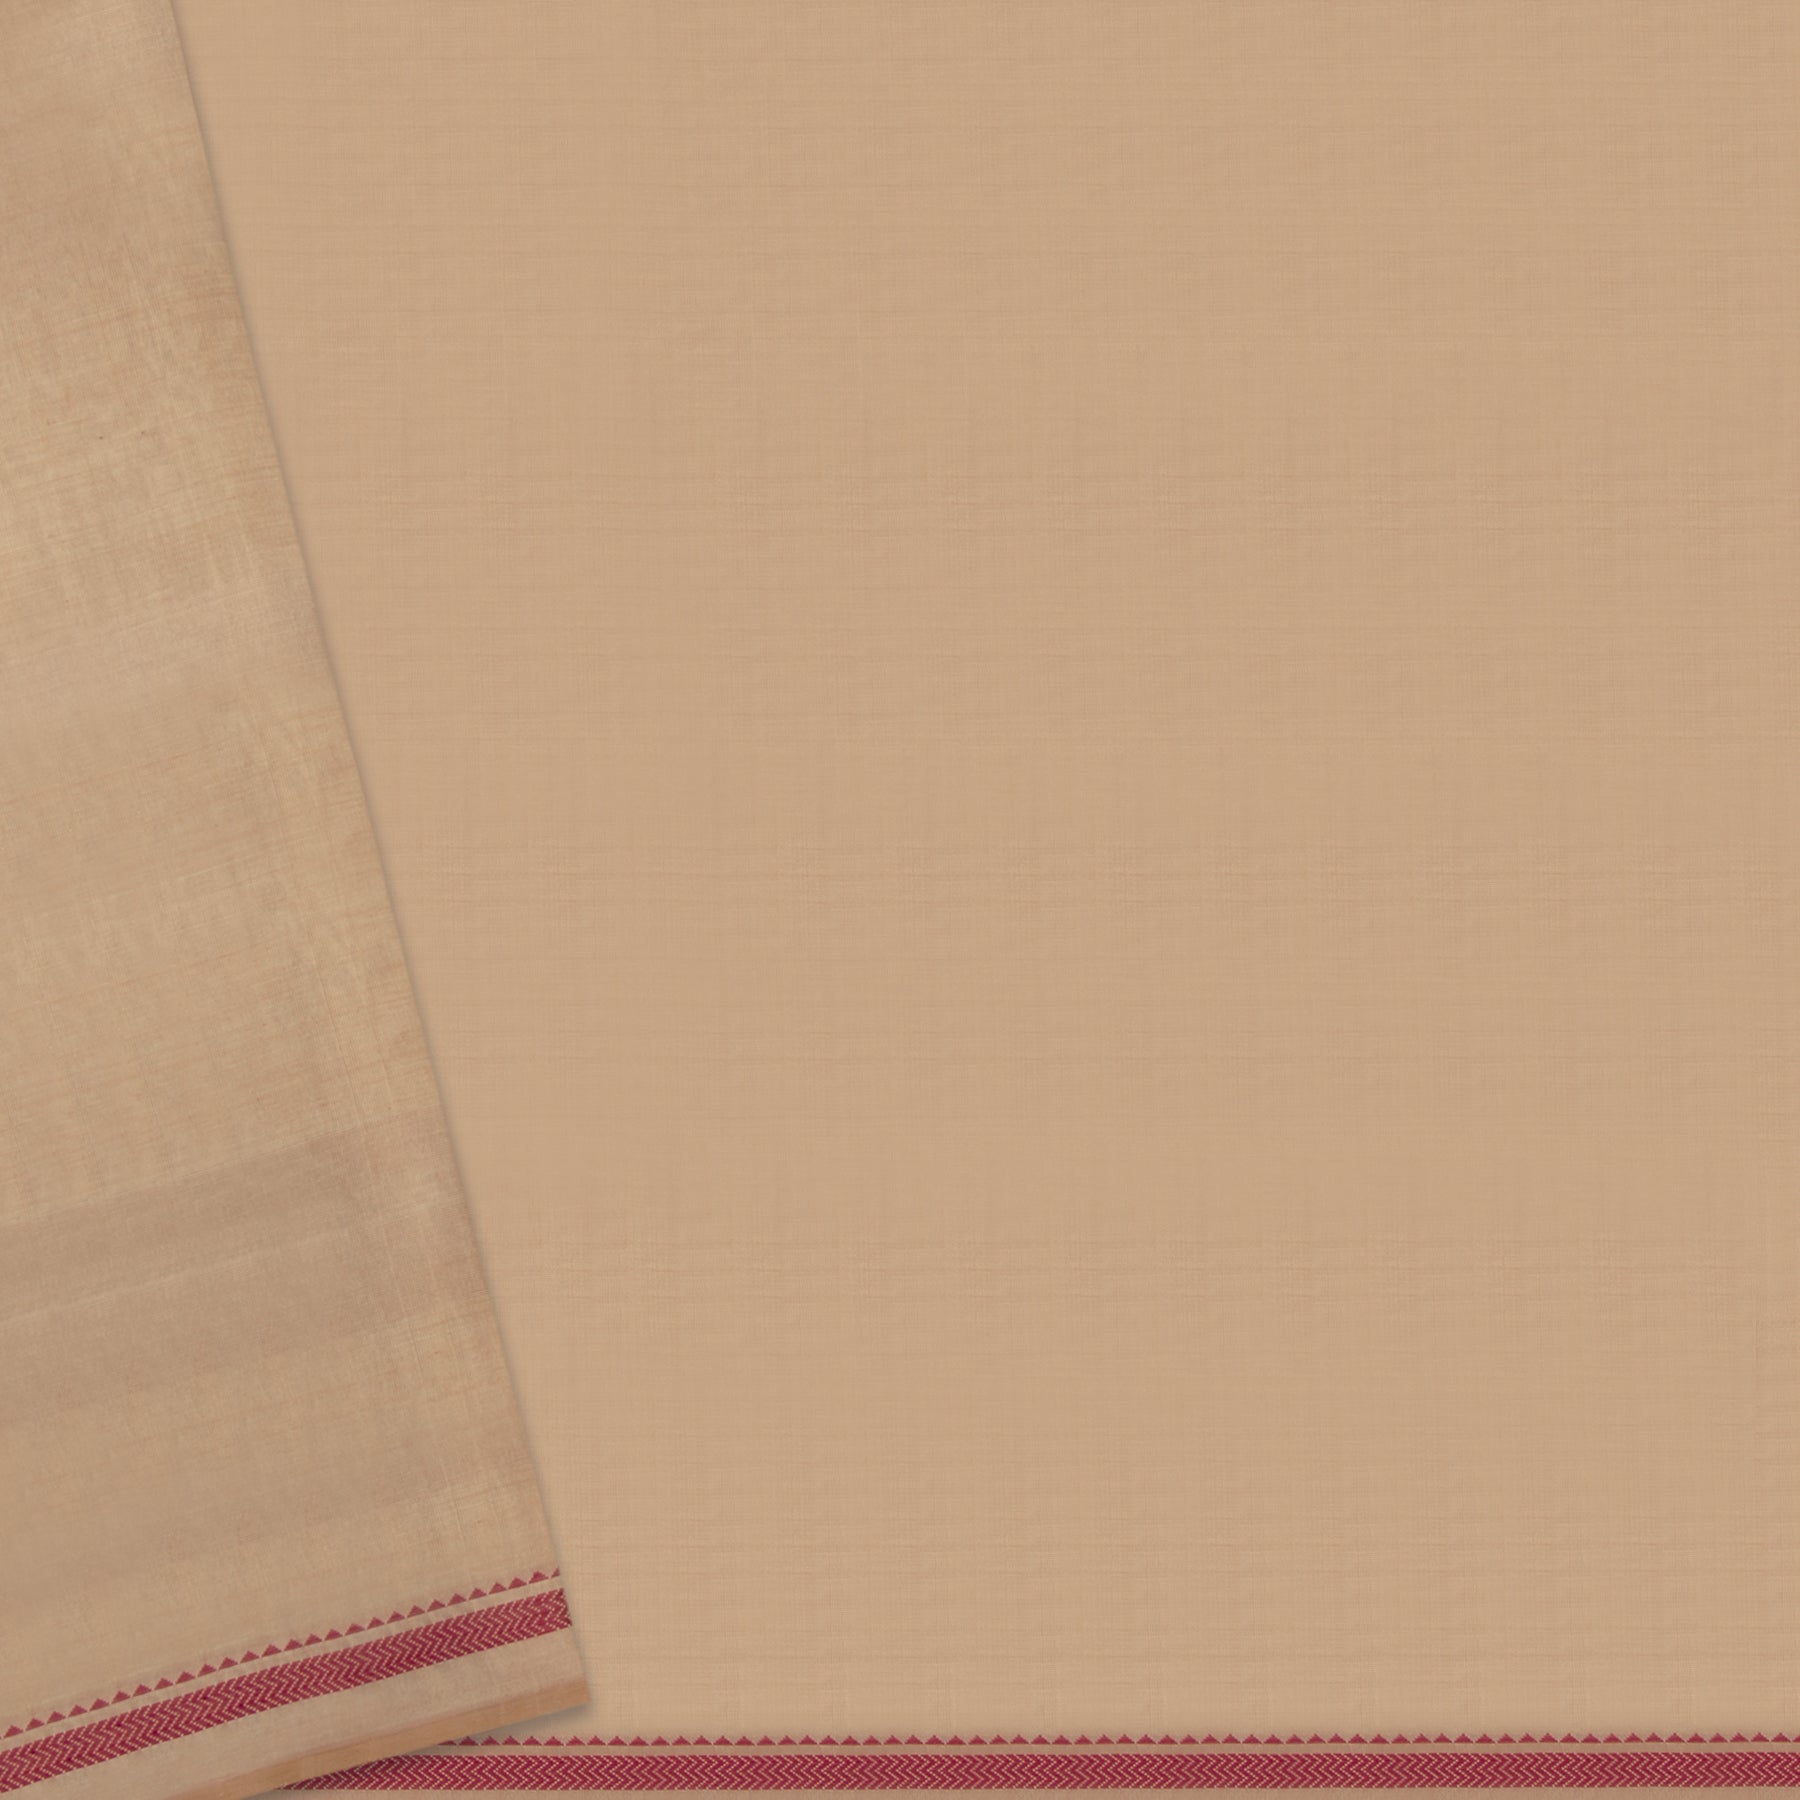 Kanakavalli Silk/Cotton Sari 22-598-HS005-09972 - Blouse View